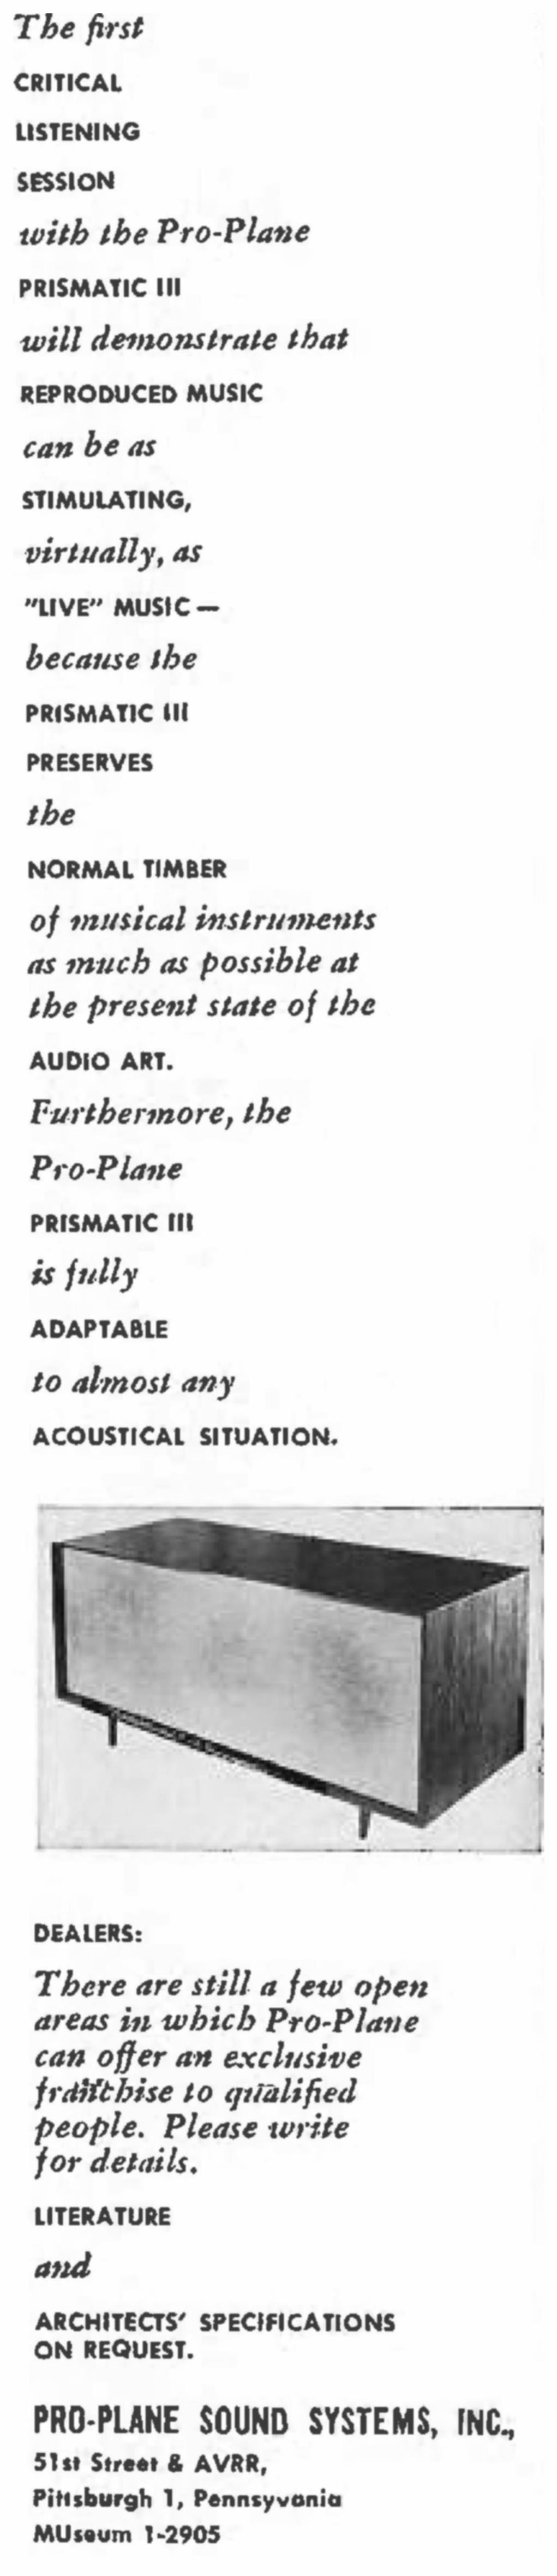 Pro-Plane Sound 1956 0.jpg